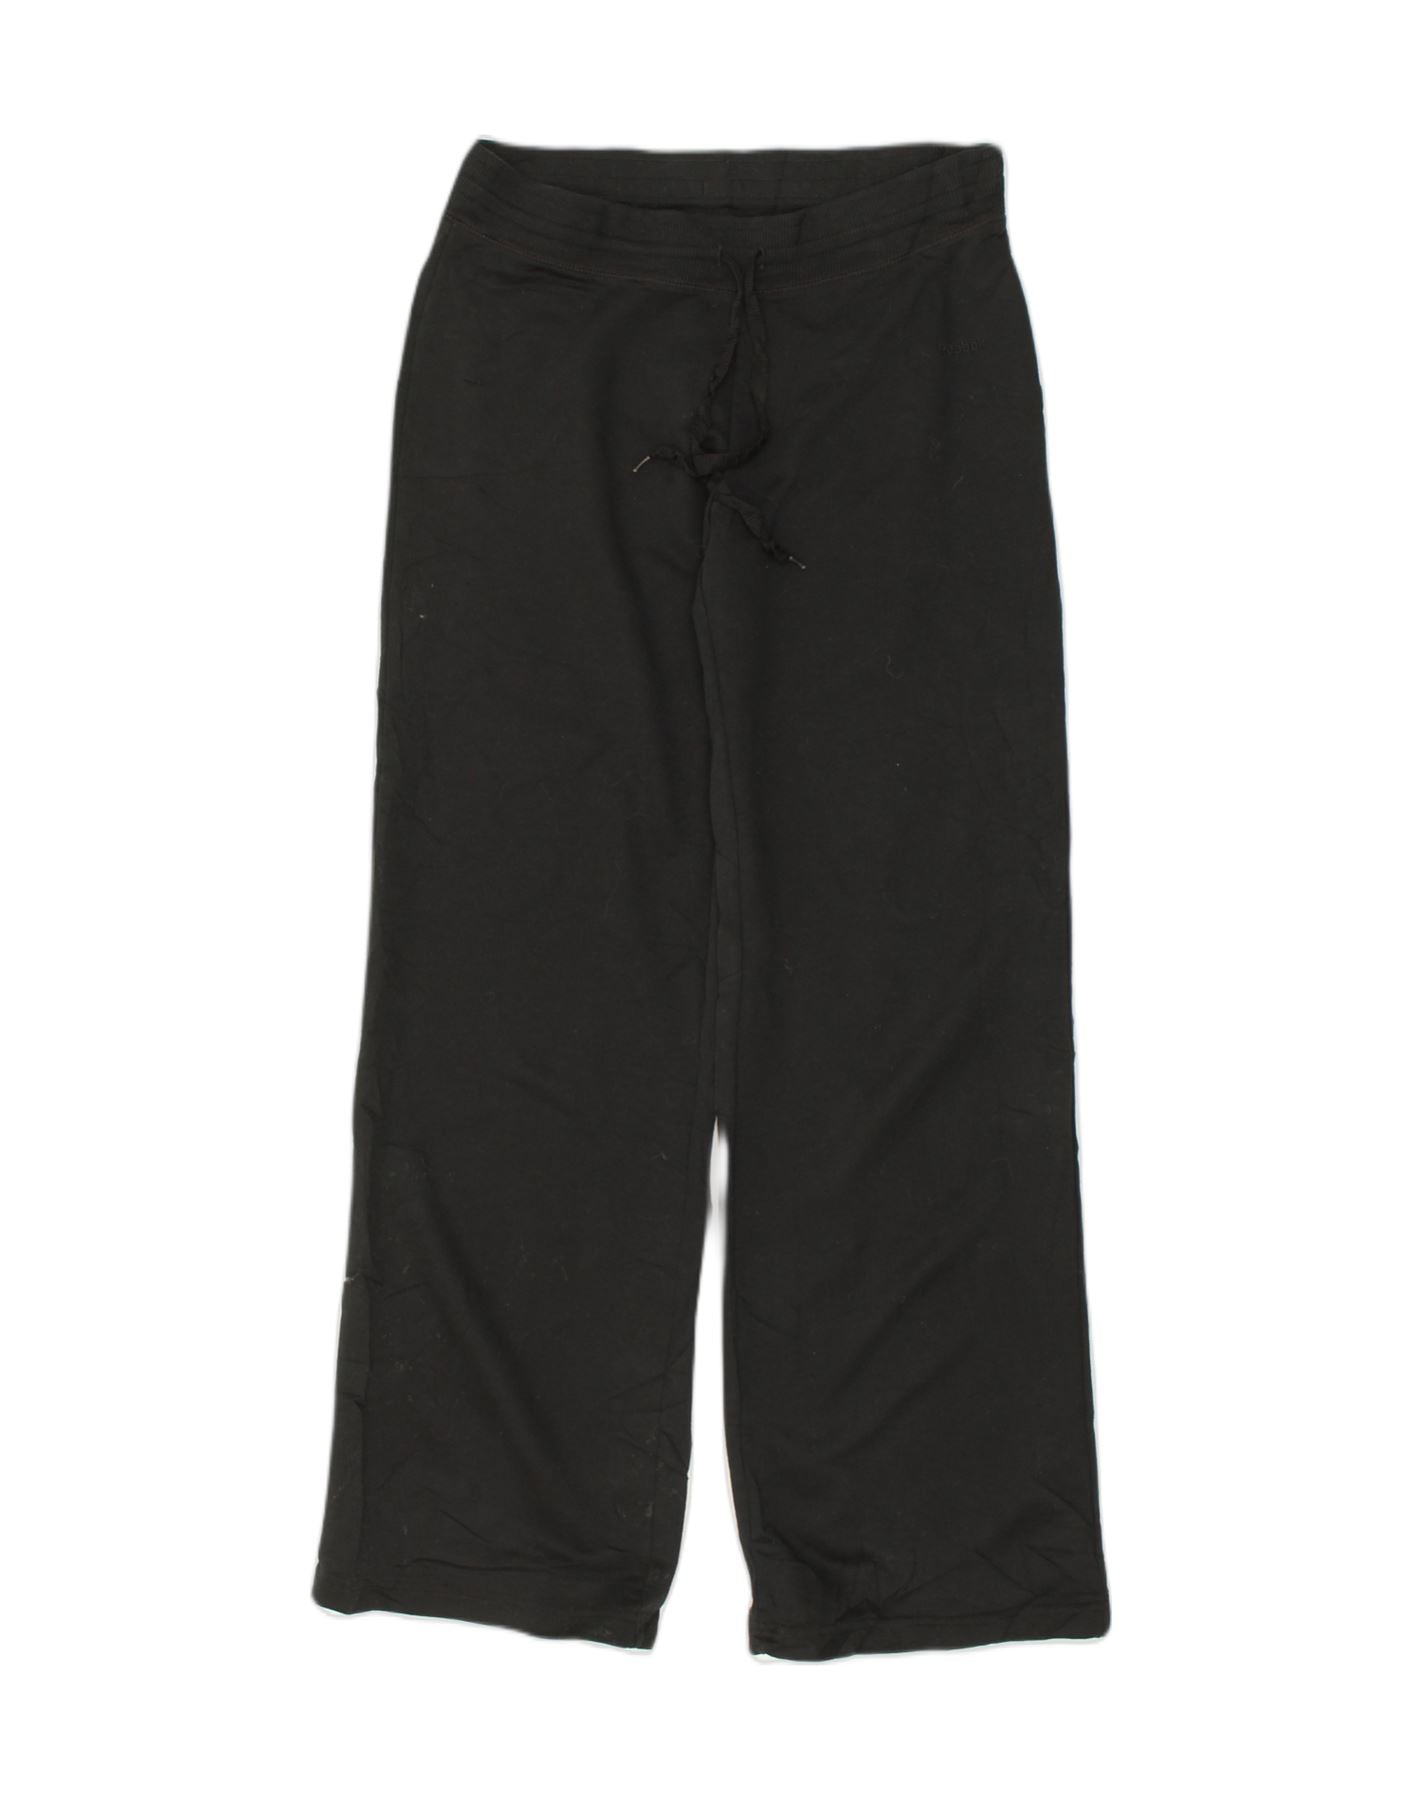 REEBOK Womens Tracksuit Trousers UK 14 Medium Black Polyester